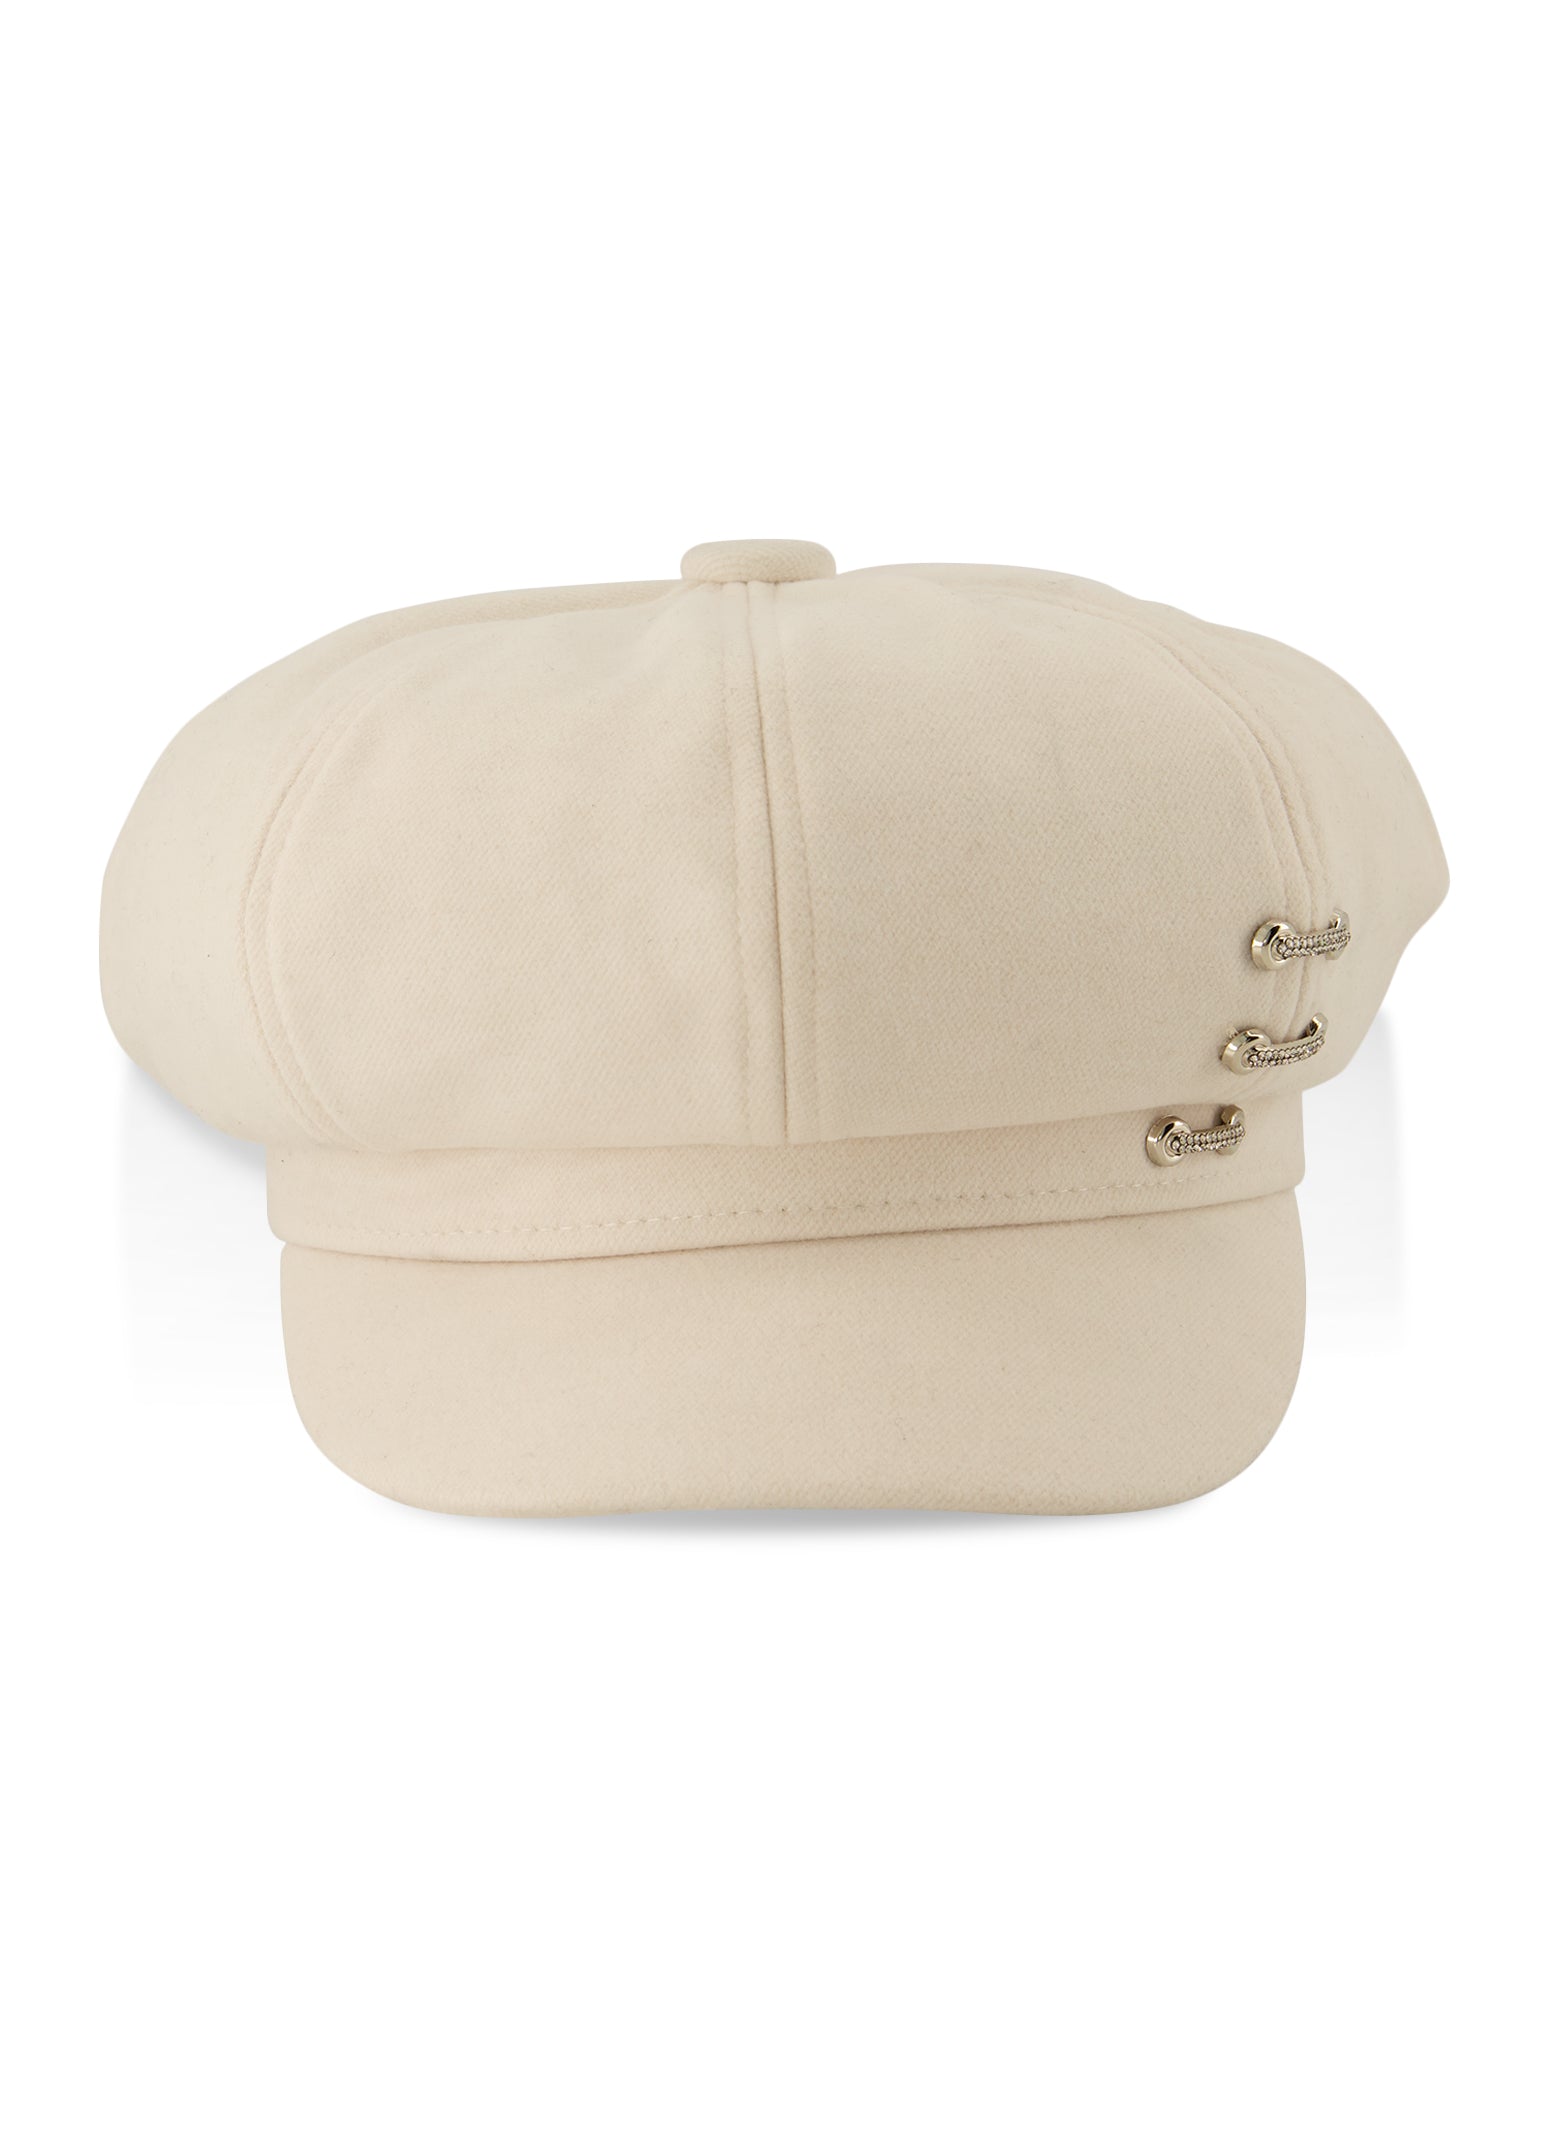 Rhinestone Detail Cabbie Hat